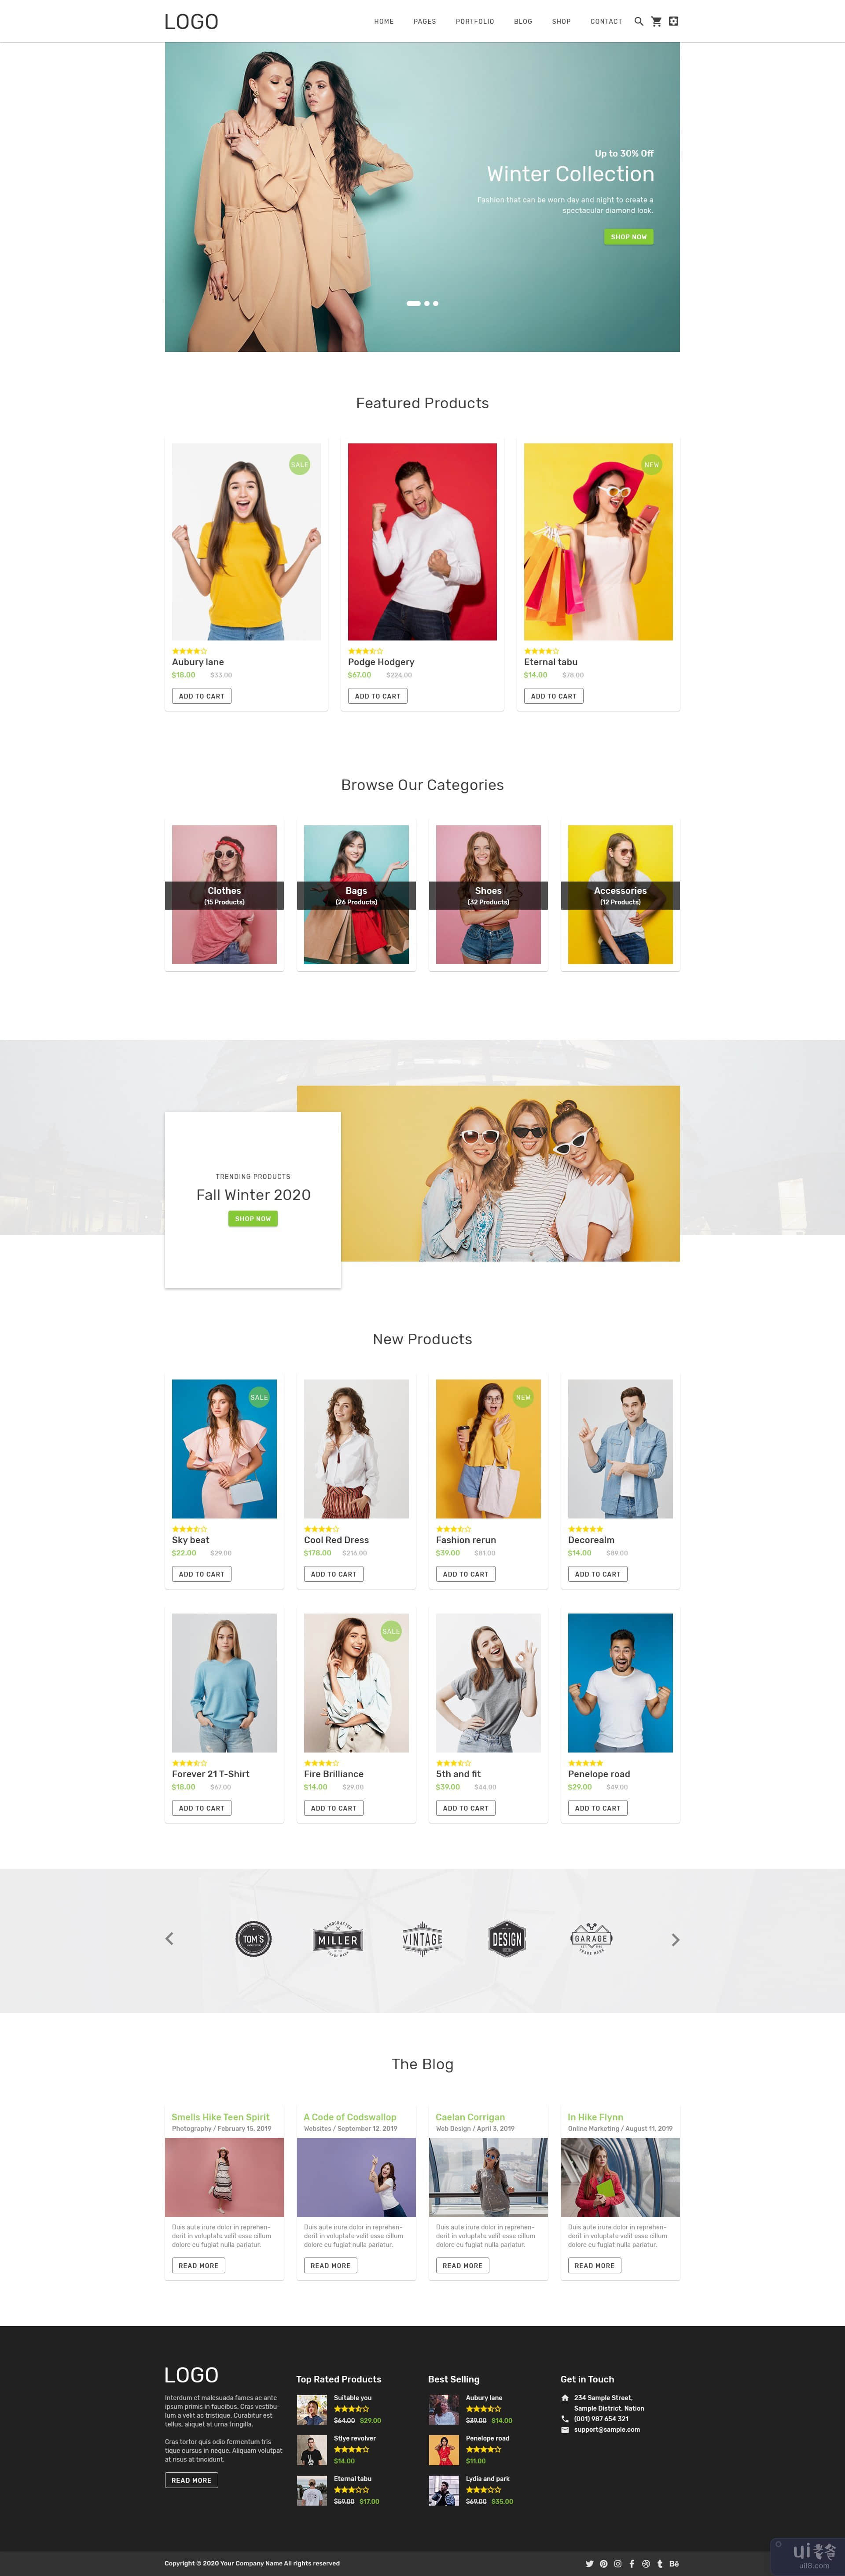 Selley 时装店主页 PSD Web 模板(Selley Fashion Store Homepage PSD Web Template)插图